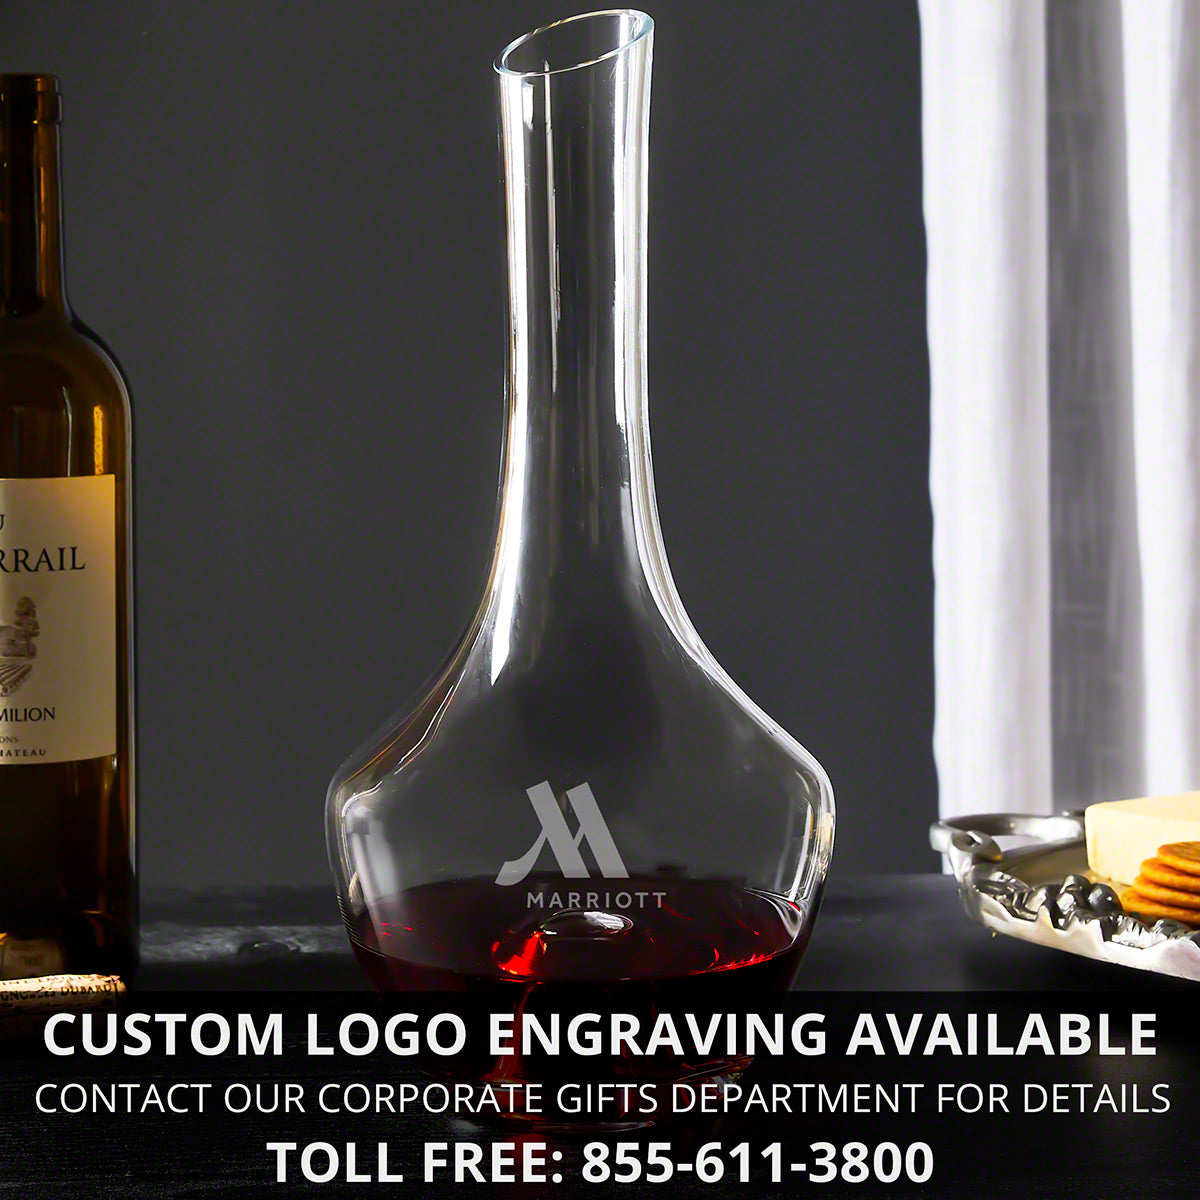 Custom Barlow Wine Glasses and Decanter Set 